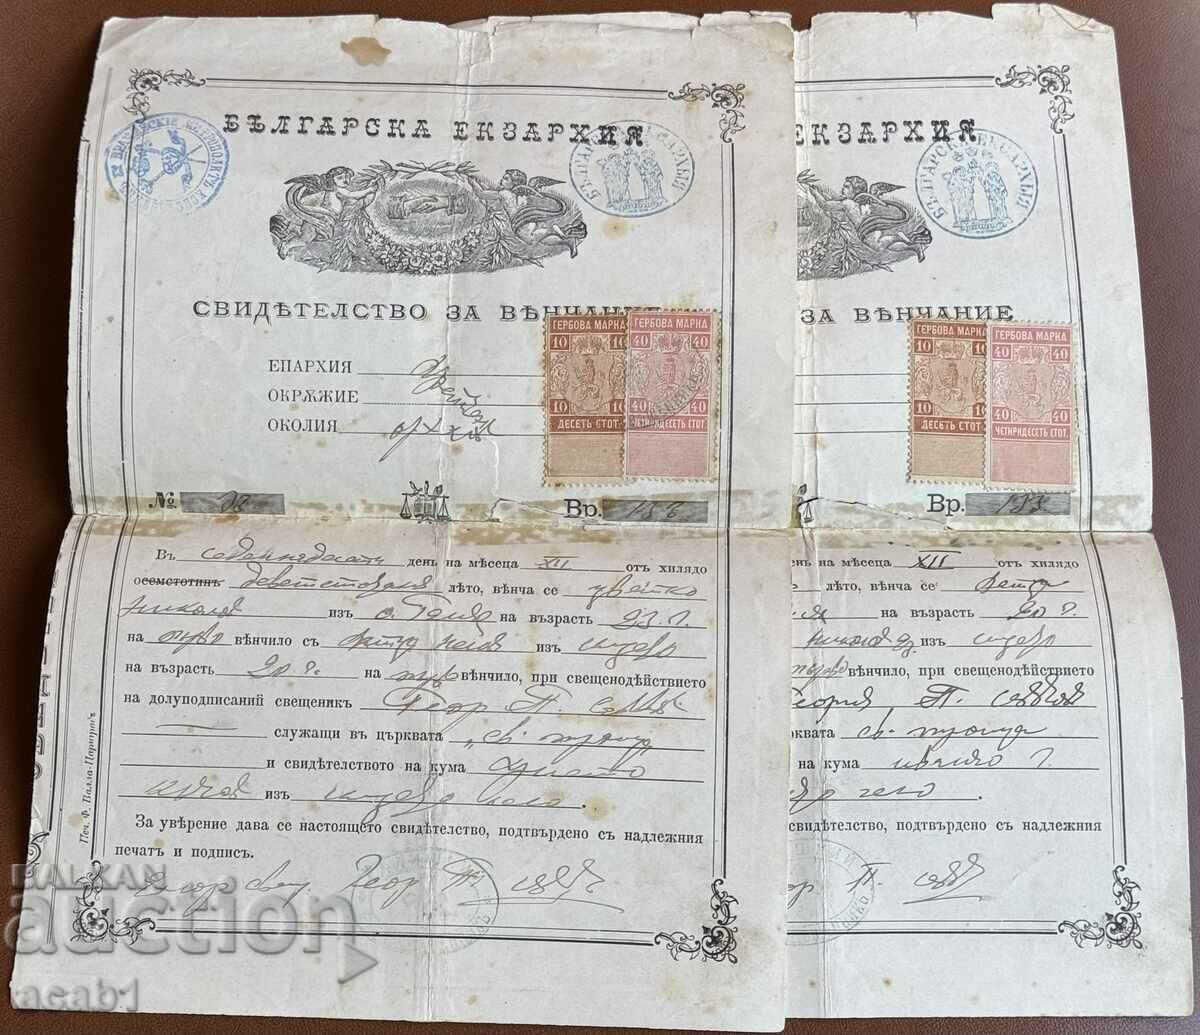 1900, village of Galiche Marriage certificate